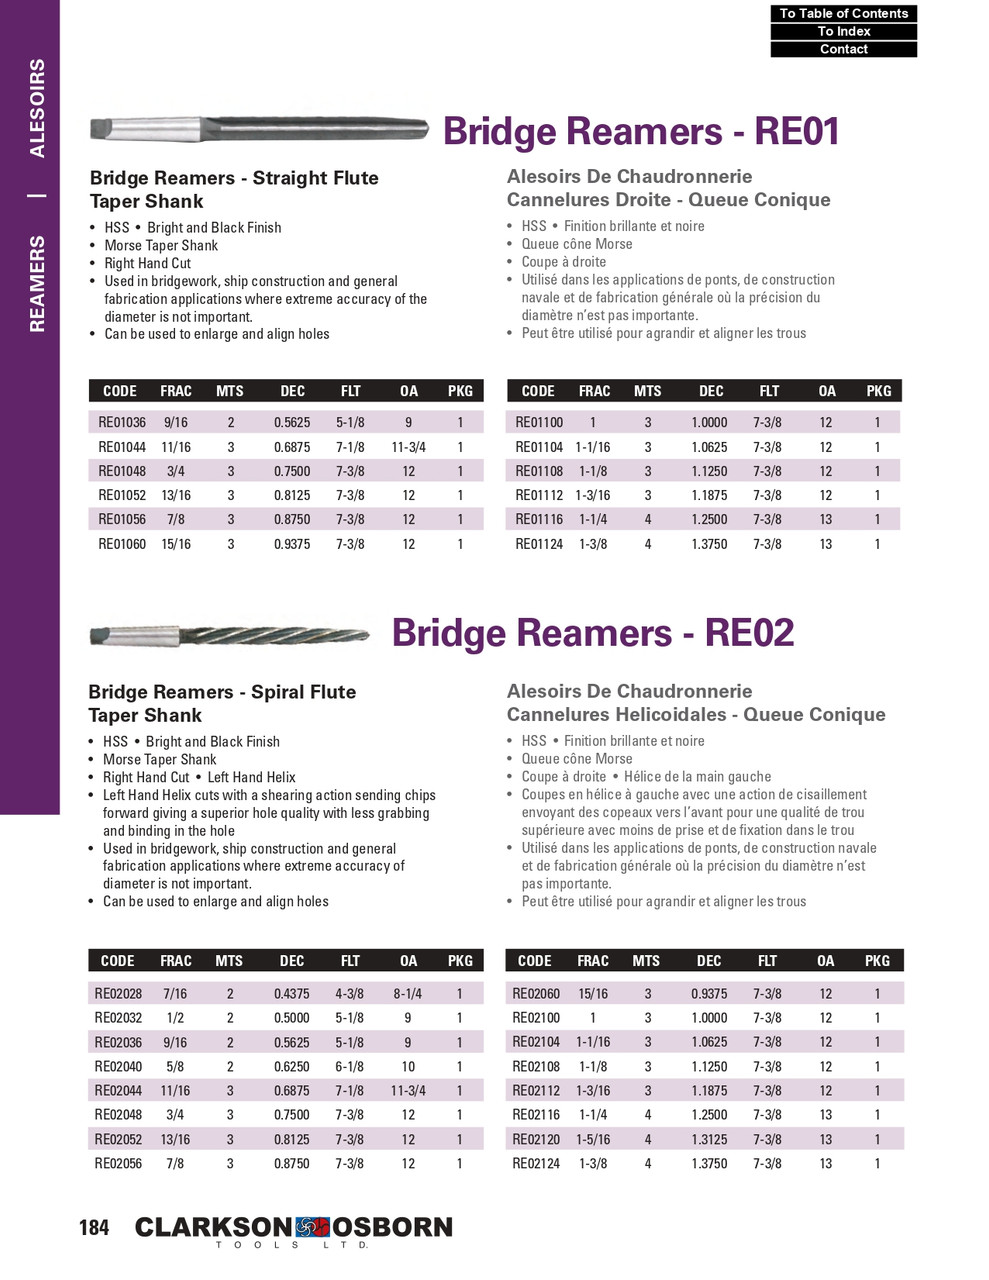 3/4" x #3 HSS Morse Taper Bridge Reamer   RE02048